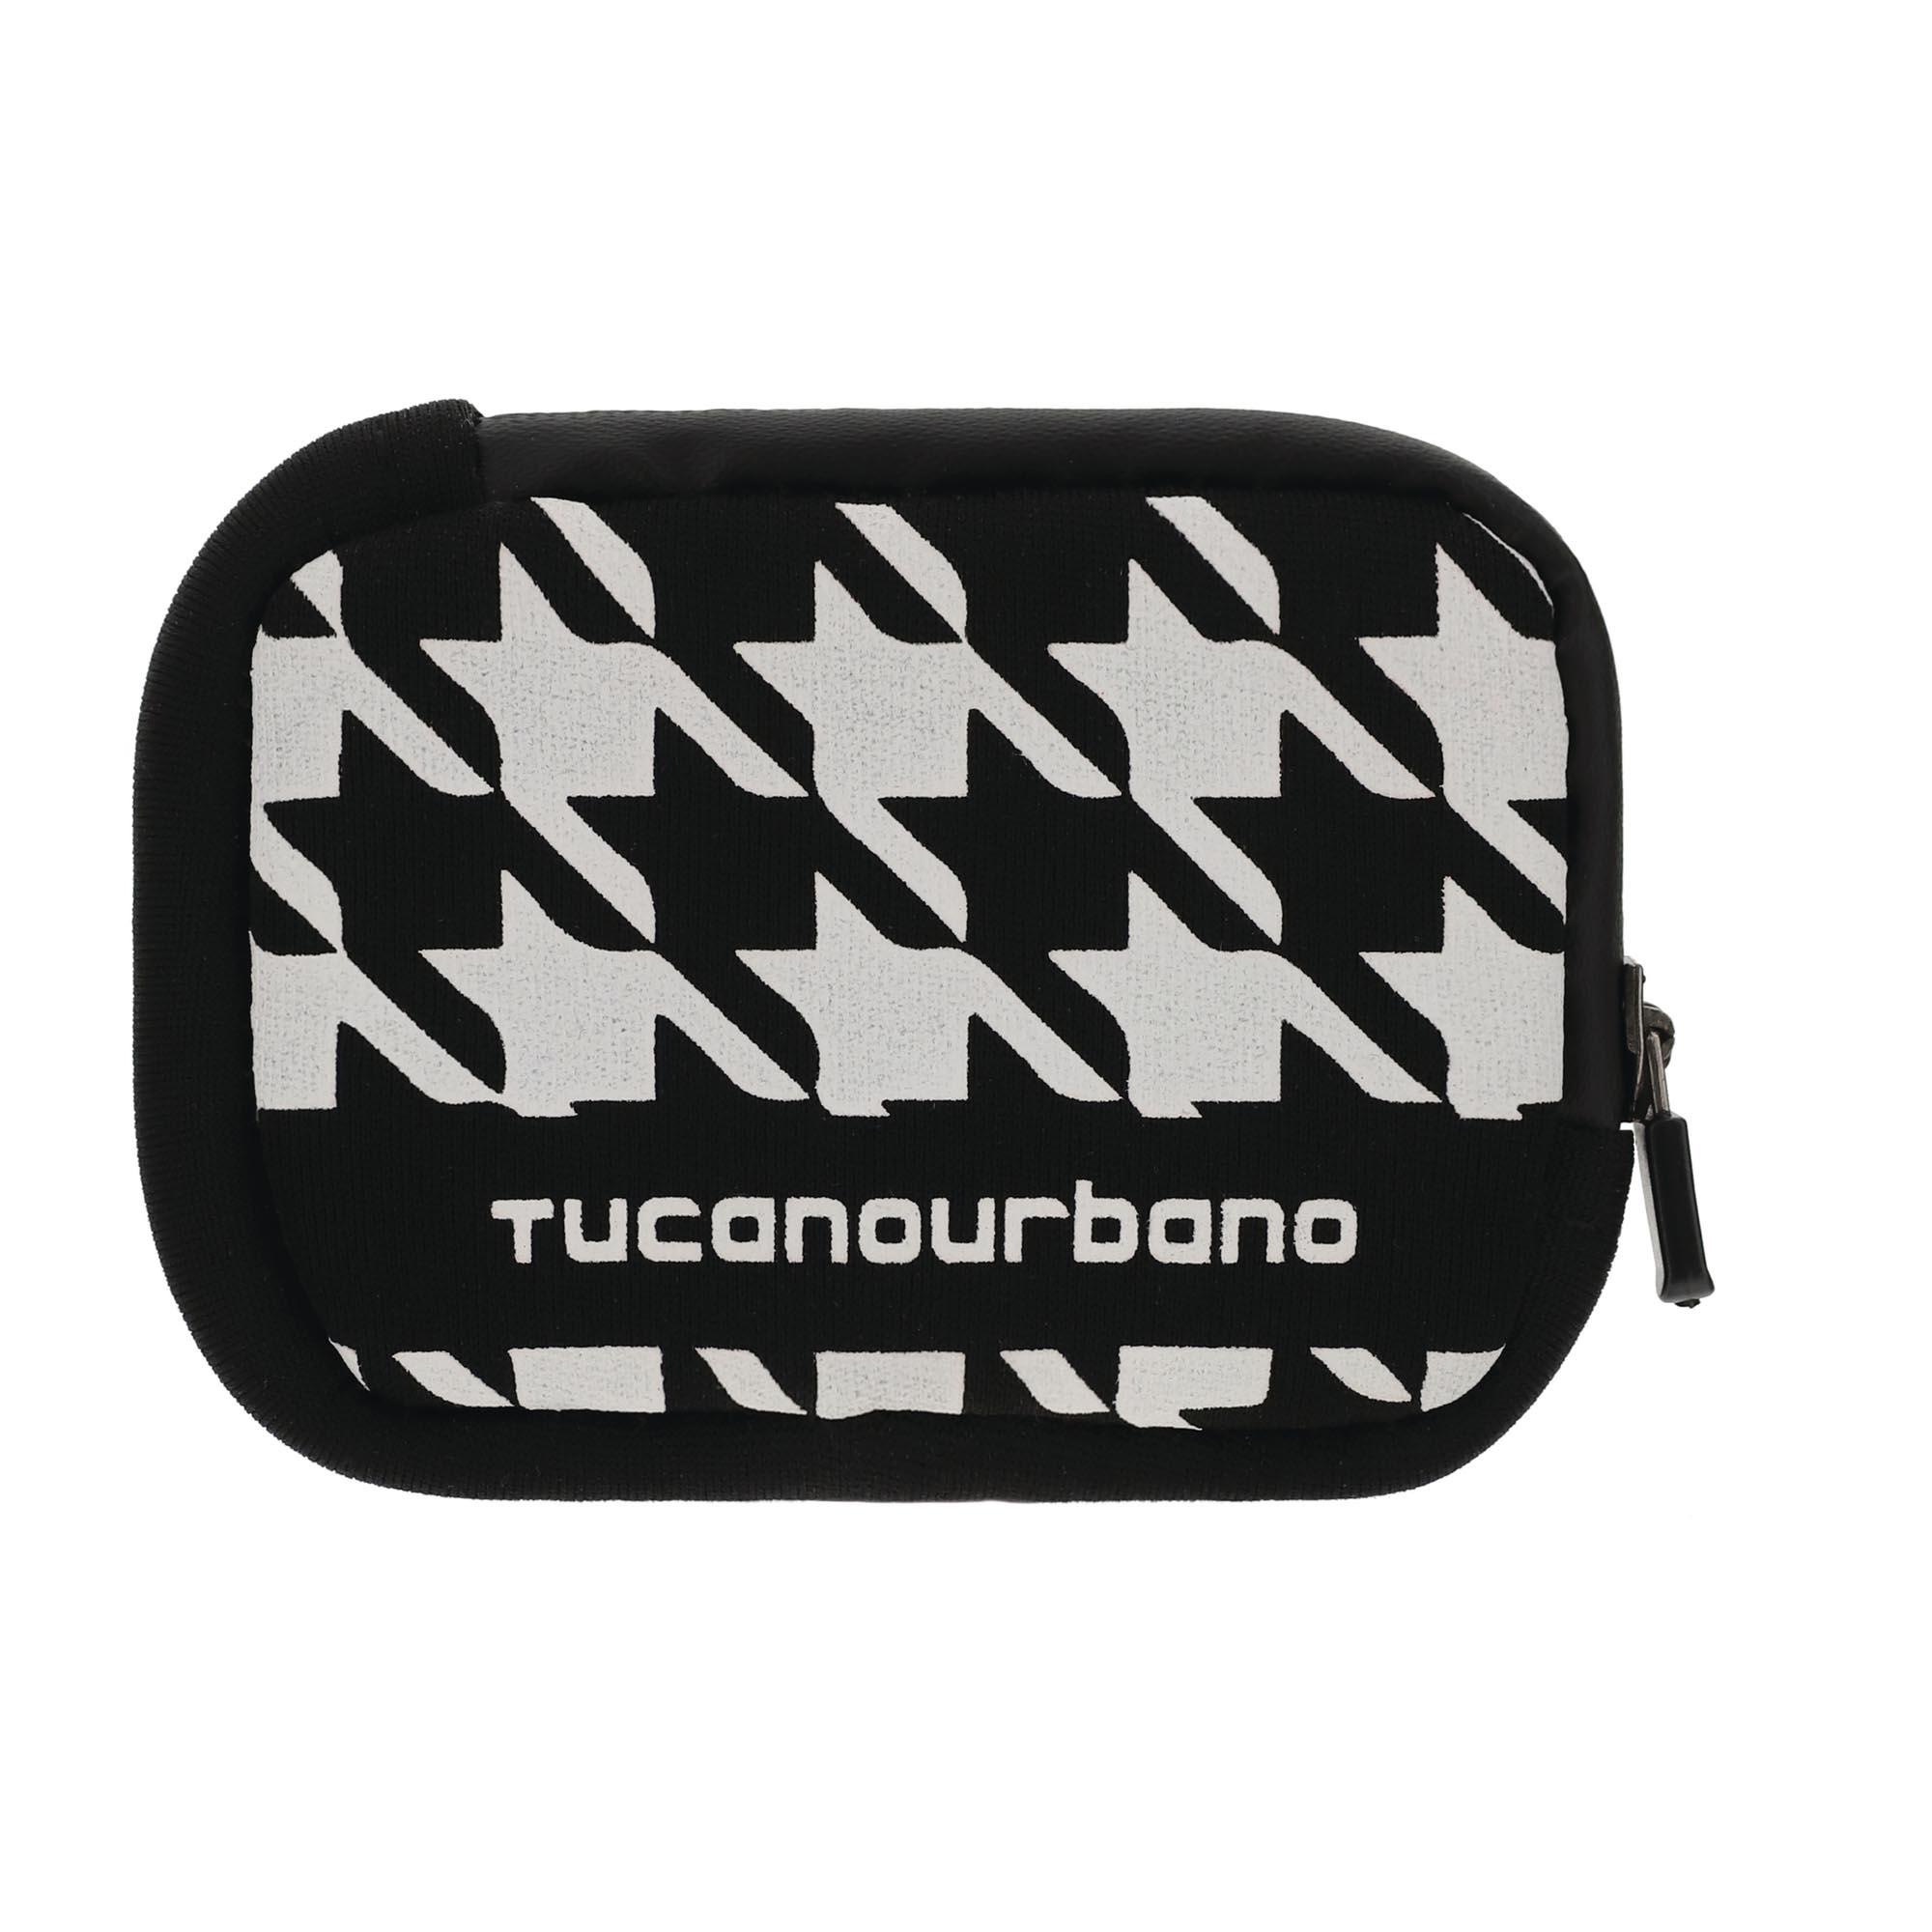 Key Bag Pied De Coq Tucano Urbano